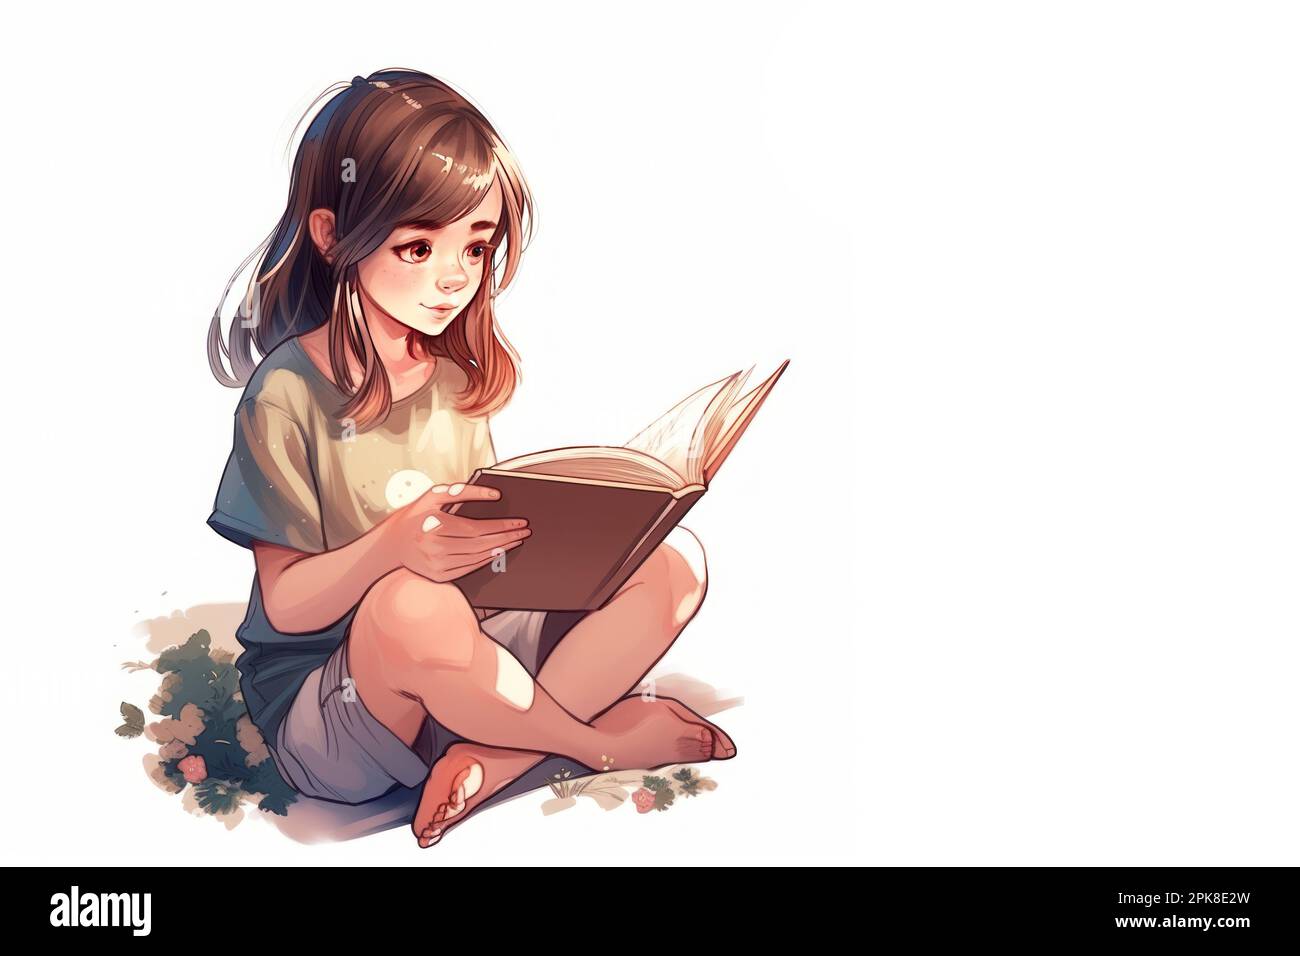 Desktop Wallpaper Chise Hatori, Anime Girl, Reading Books, Hd Image,  Picture, Background, 2fea8e